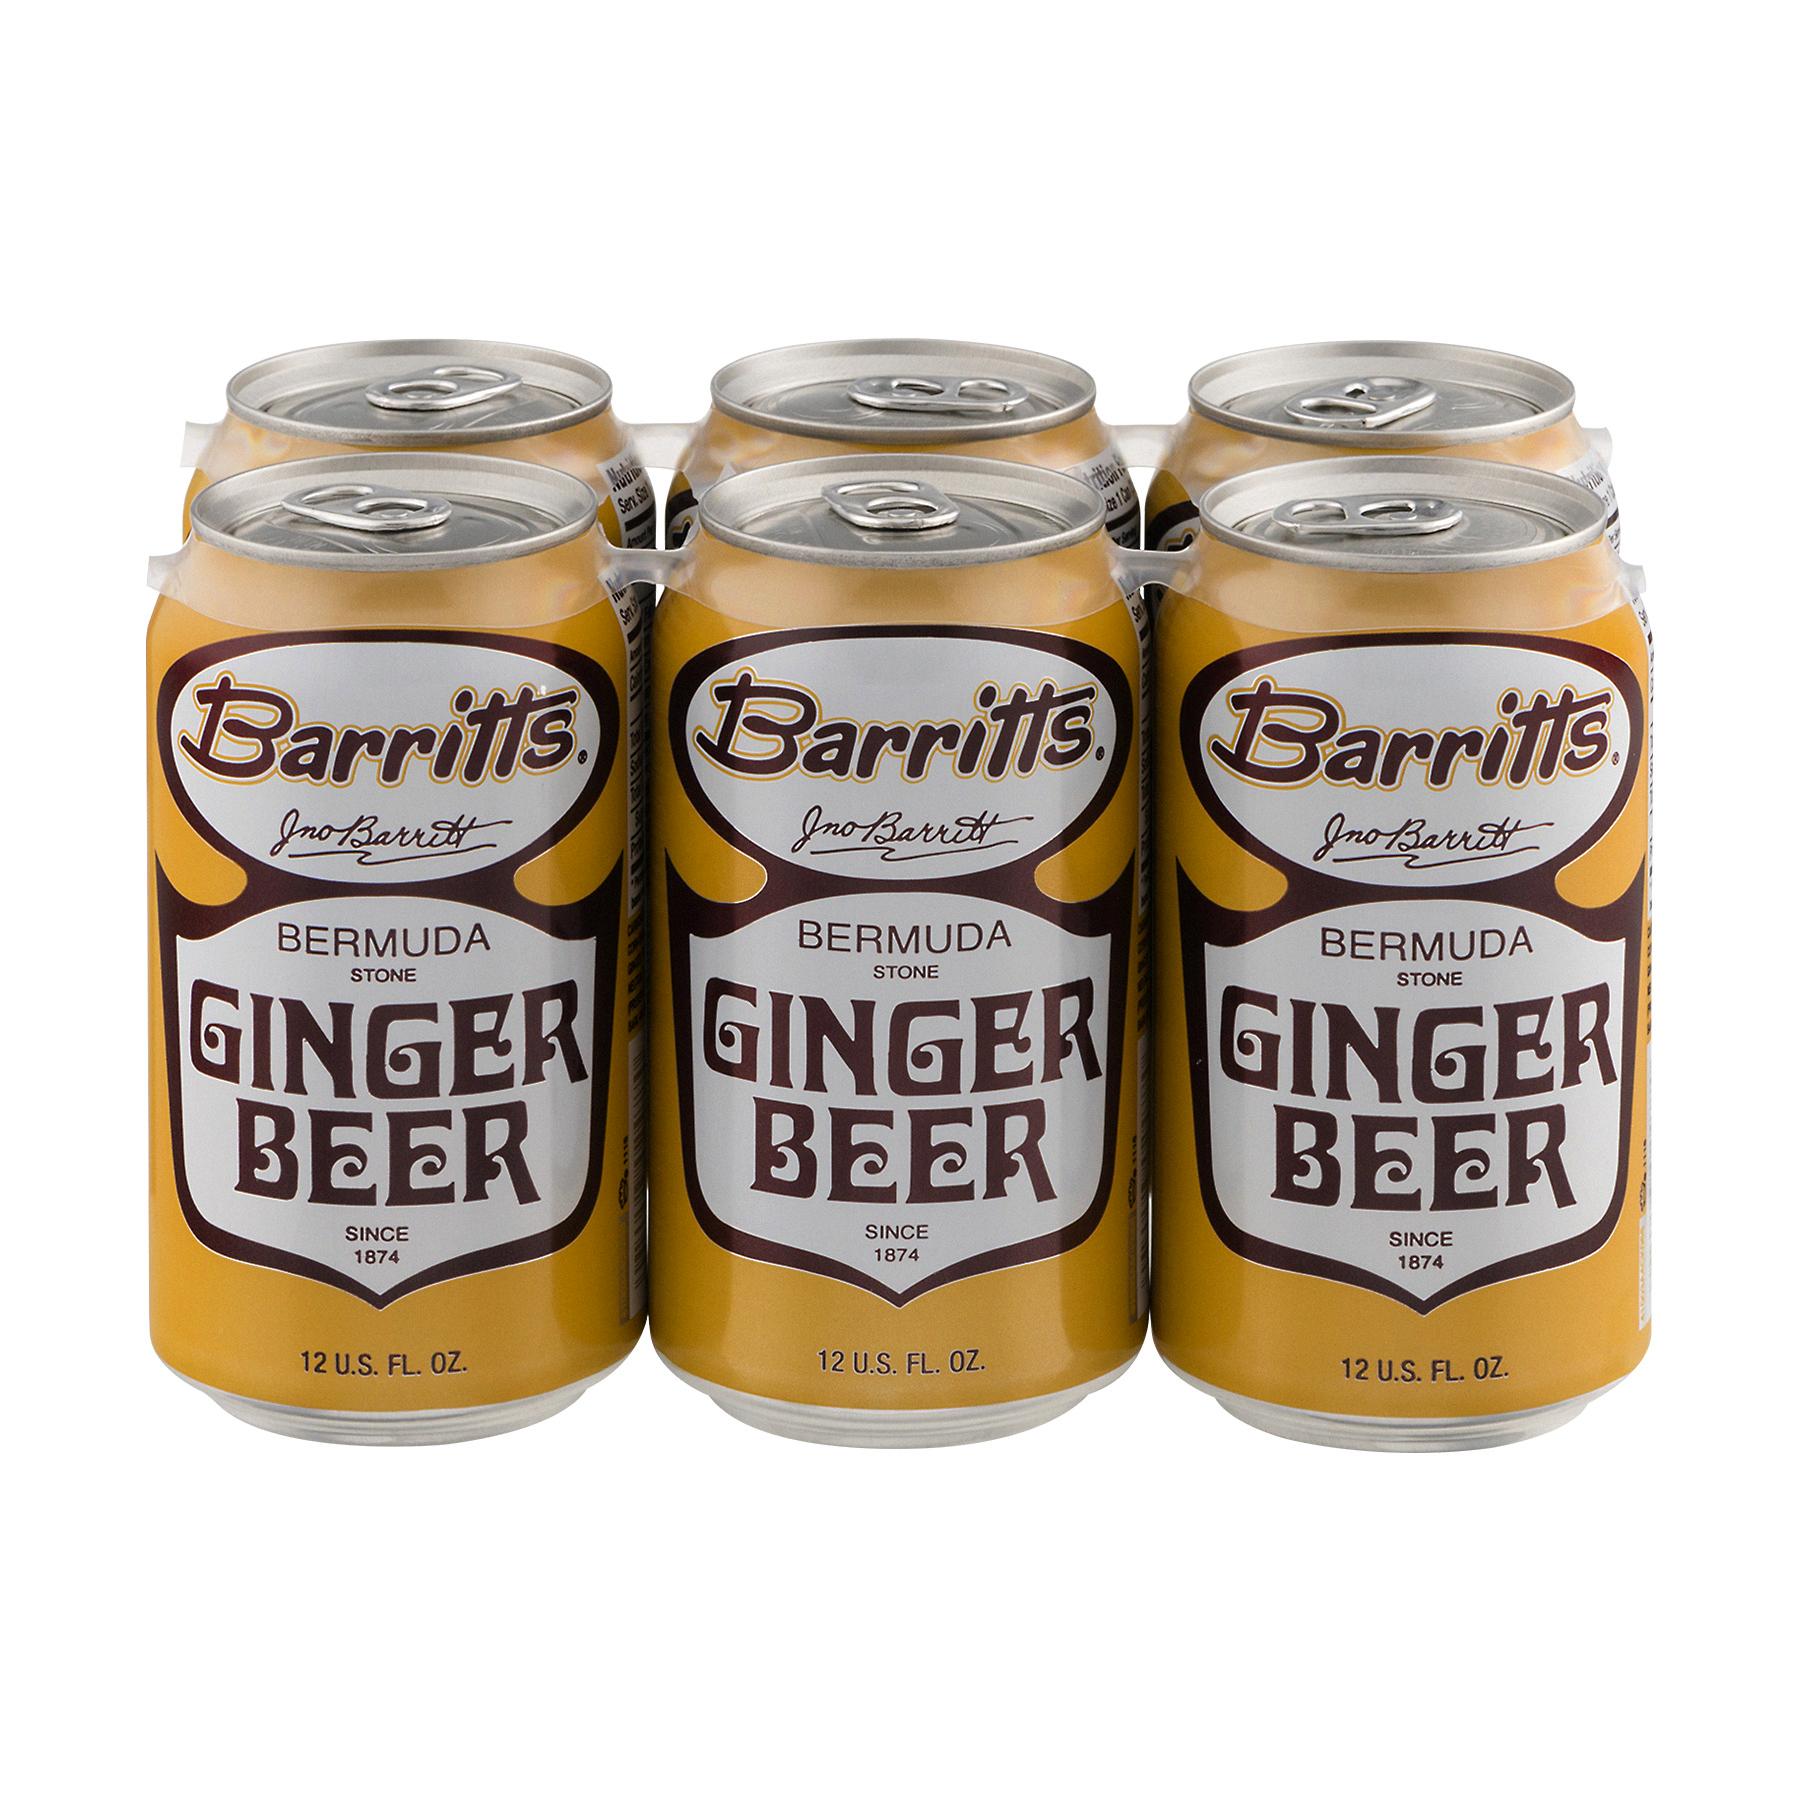 barritts ginger beer ingredients